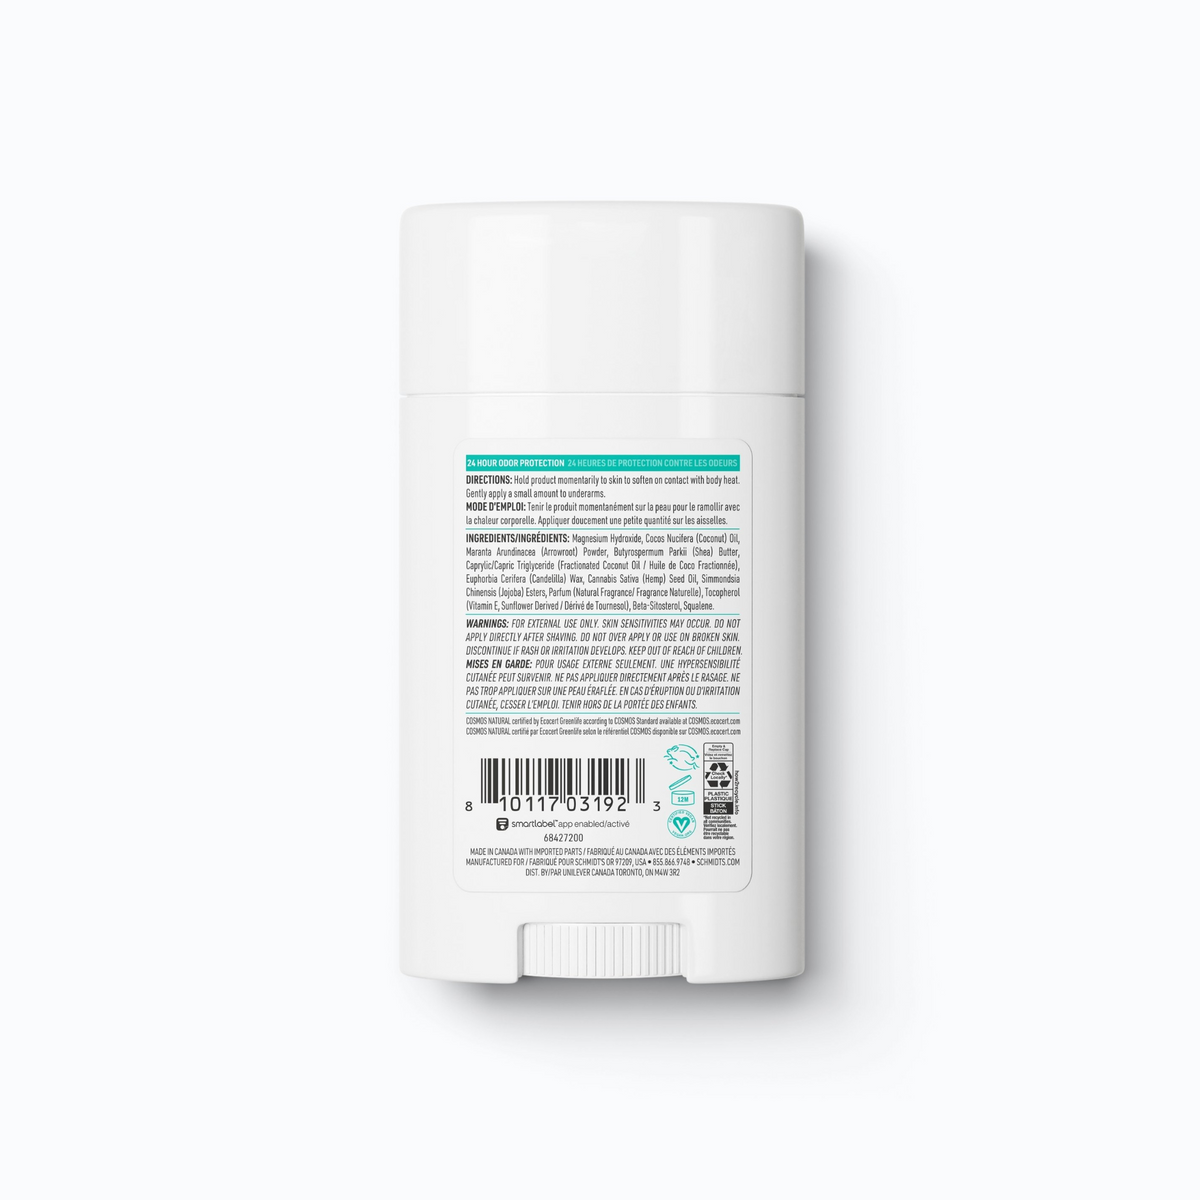 Schmidt's Hemp Seed Oil & Patchouli Sensitive Deodorant (2.65 oz) #10085618